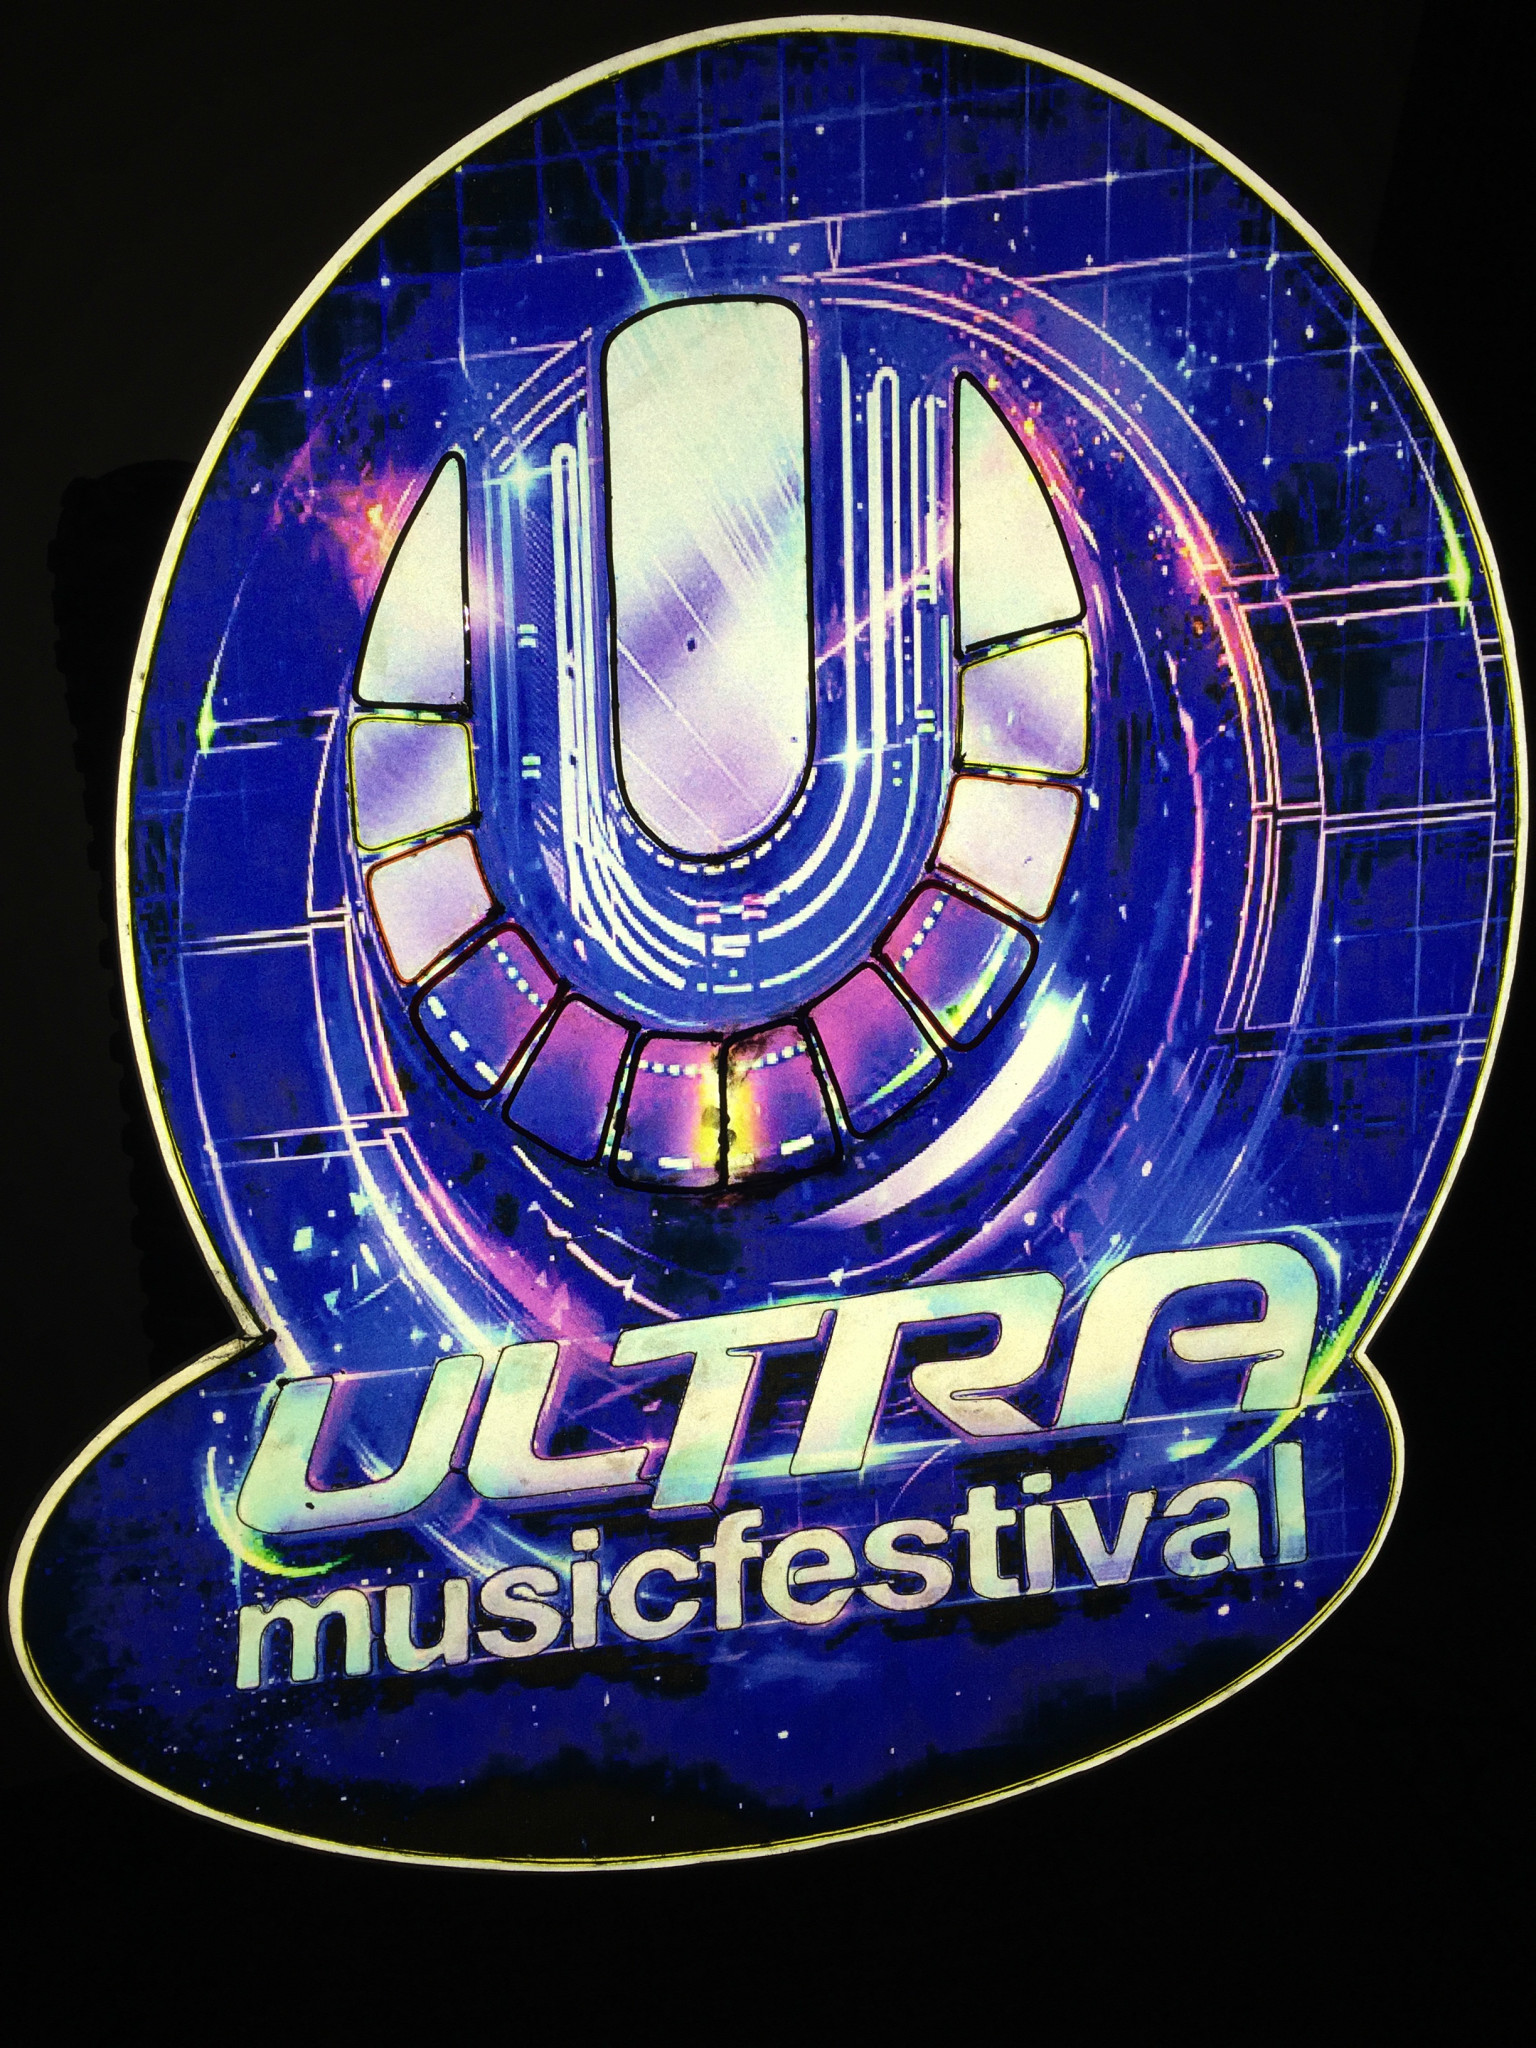 ultra-logo